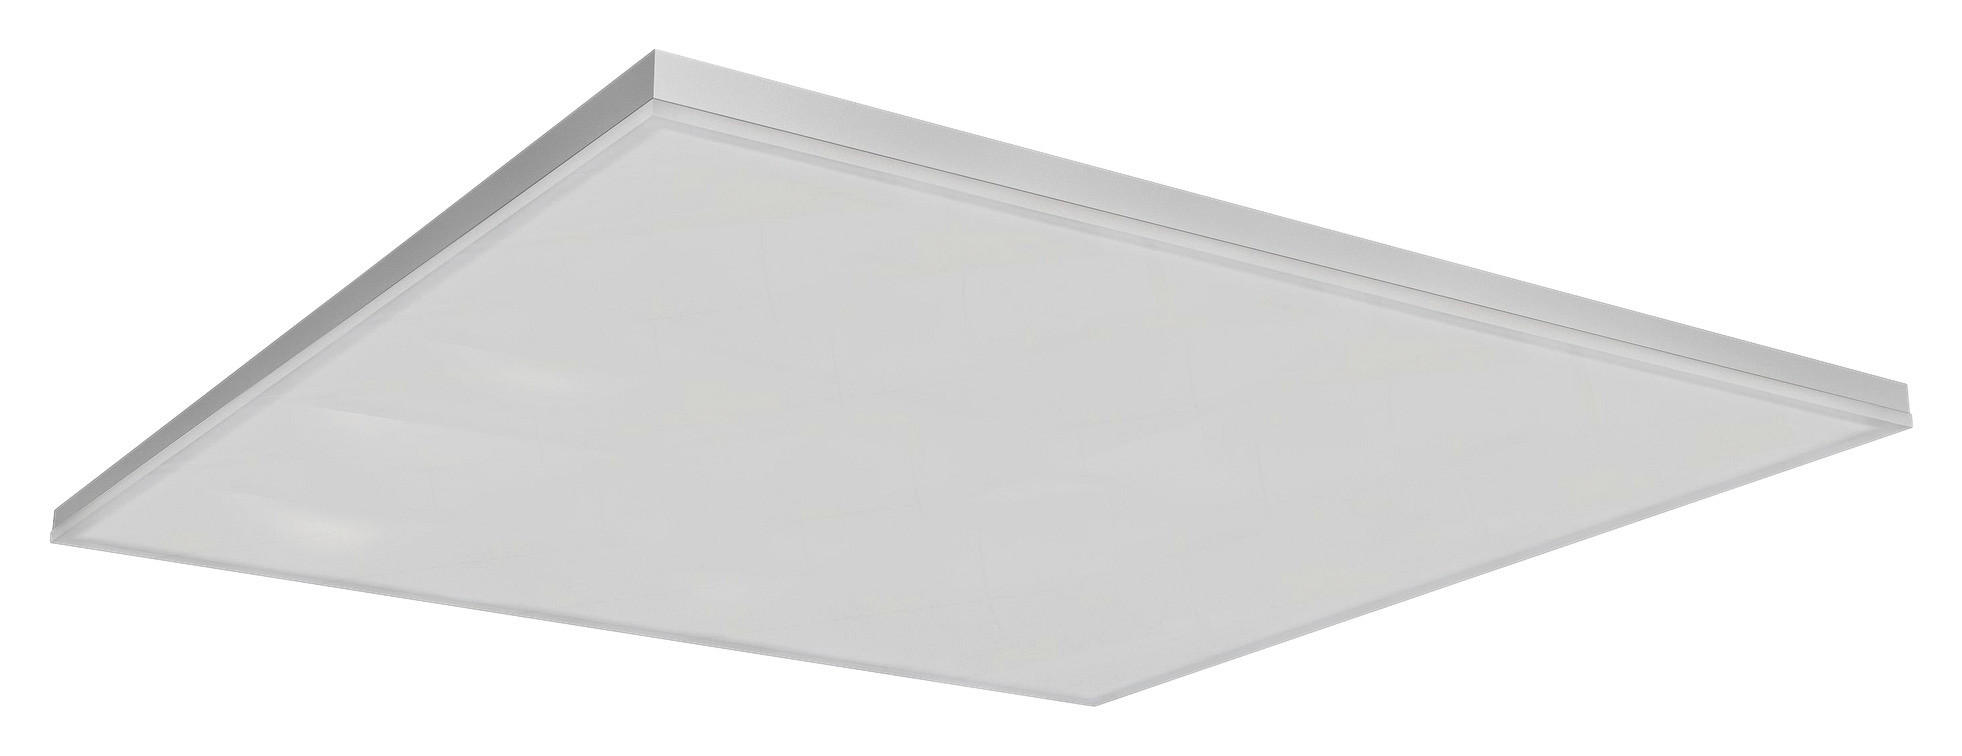 LED-PANEEL 59,6/59,6/6,9 cm    - Weiß, Design, Metall (59,6/59,6/6,9cm) - Ledvance